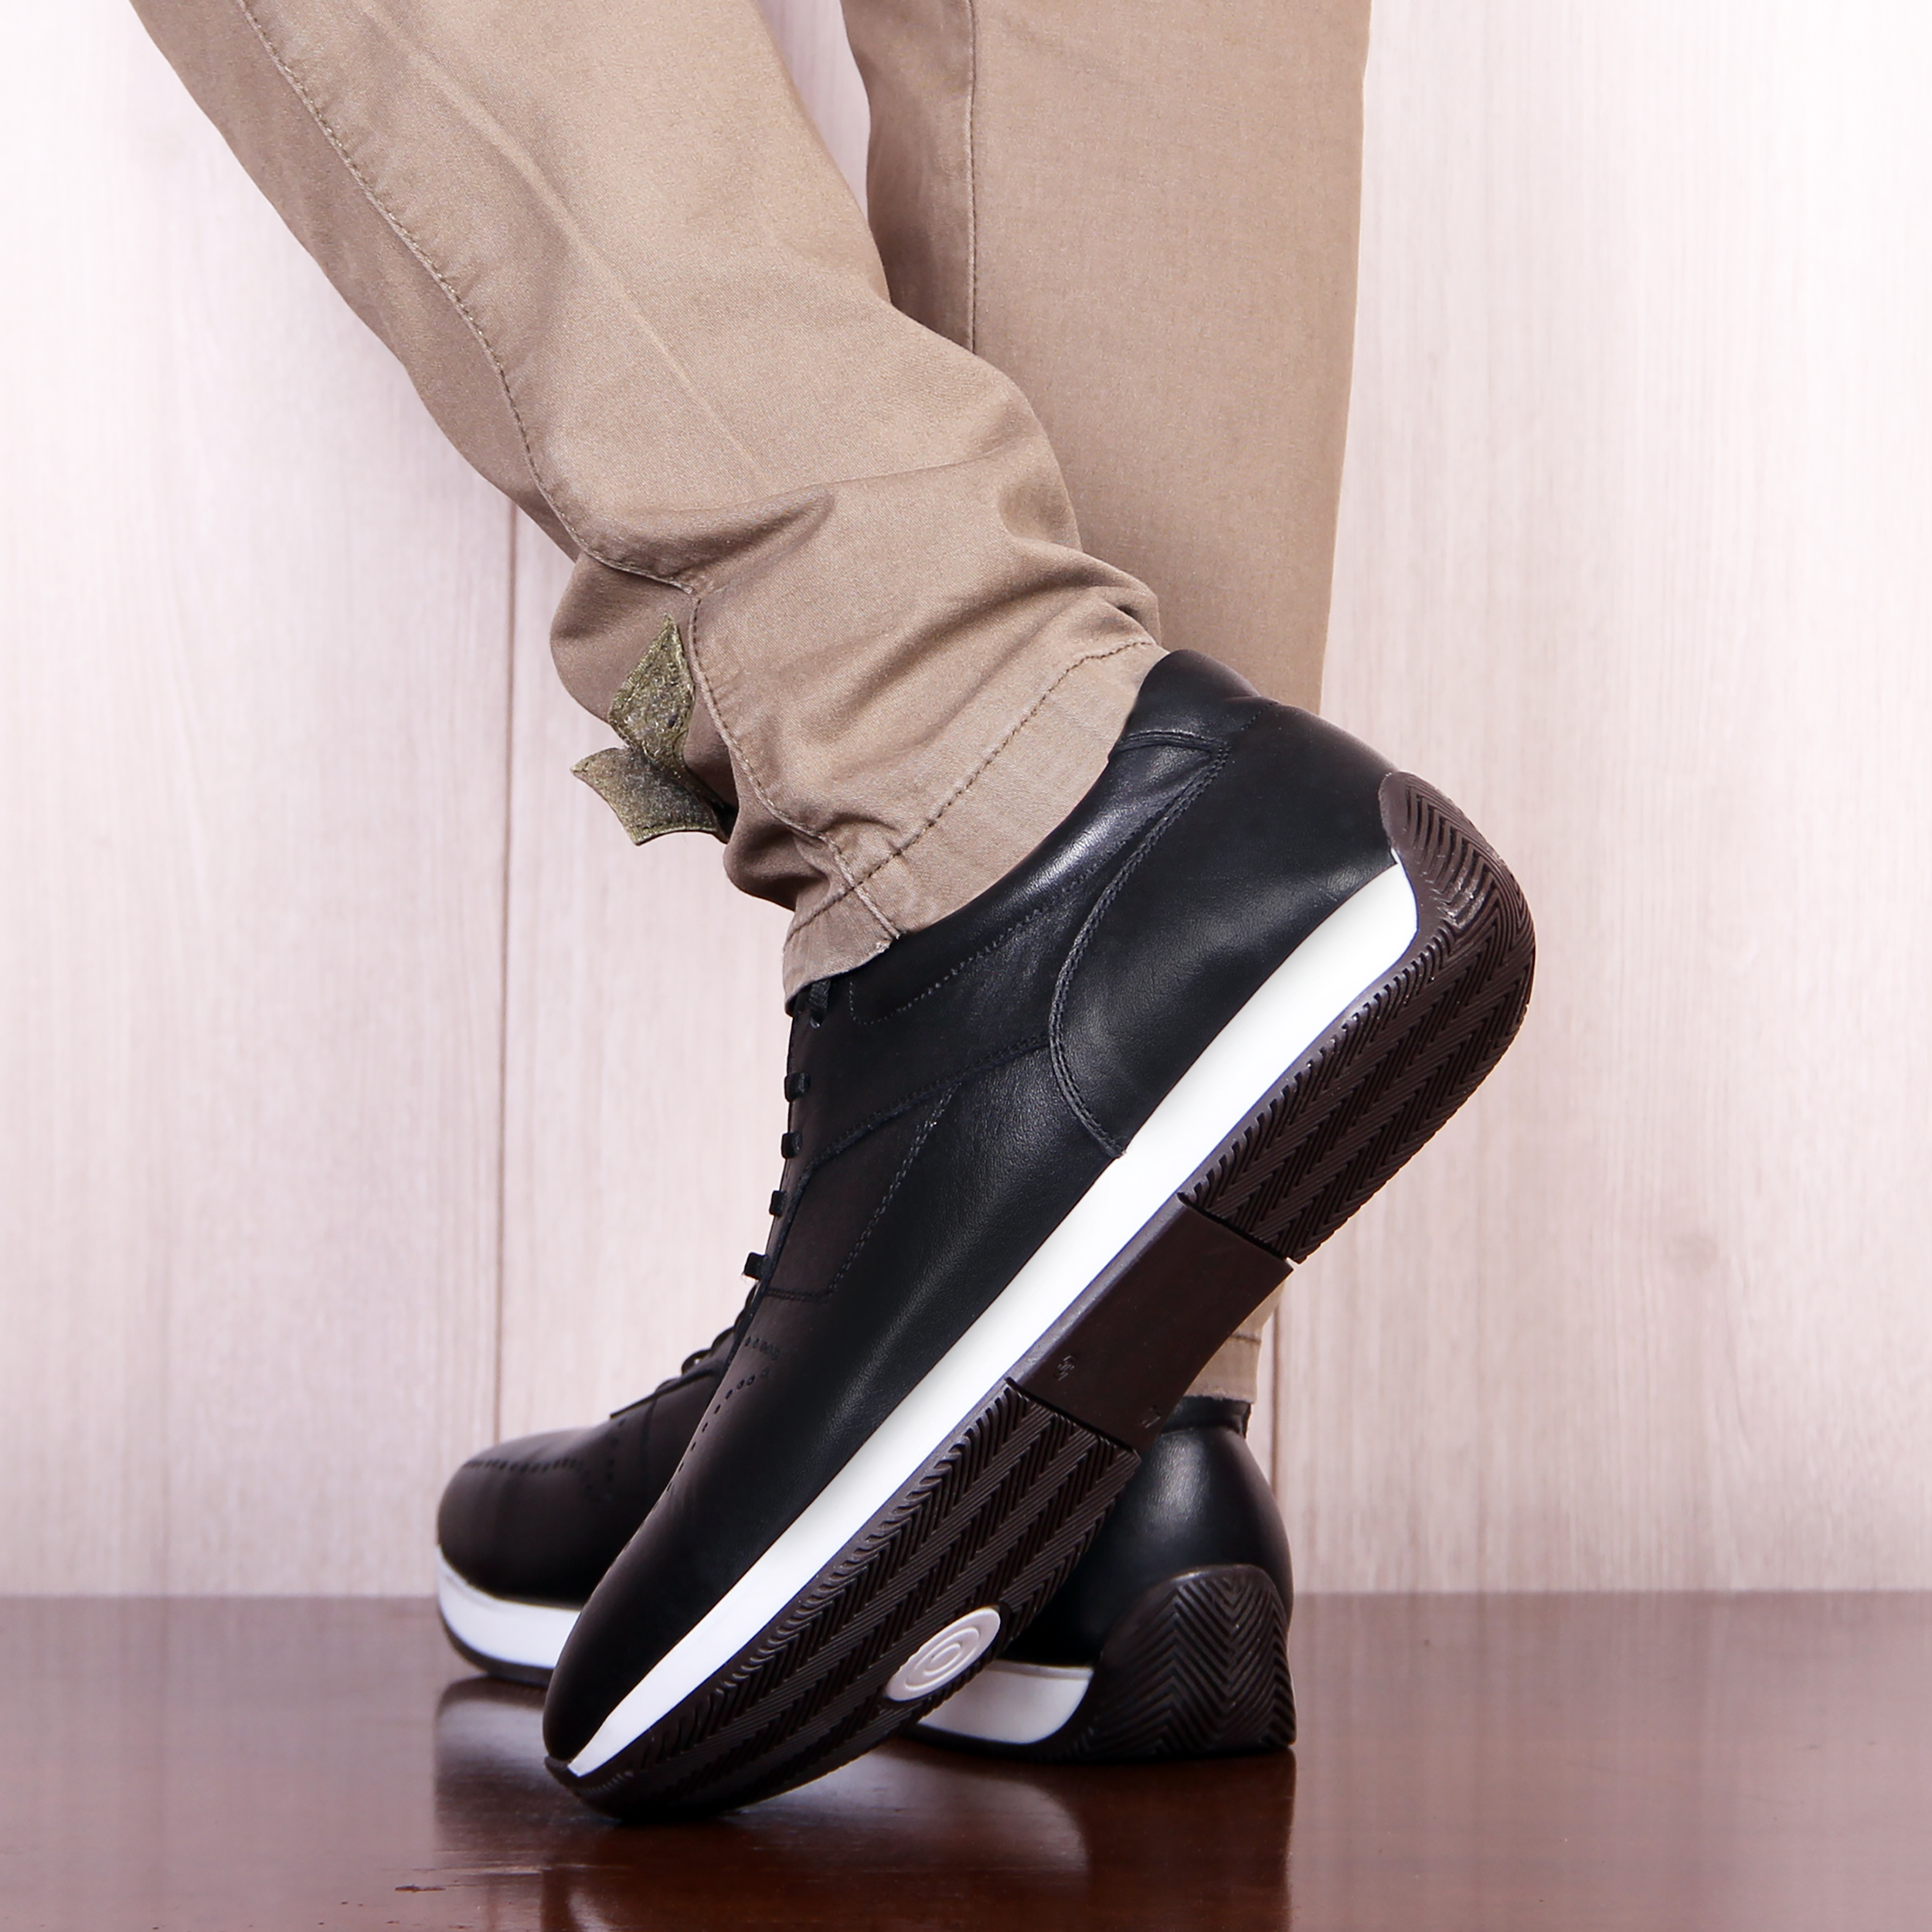 SHAHRECHARM leather men's casual shoes , 1-GH5003 Model 